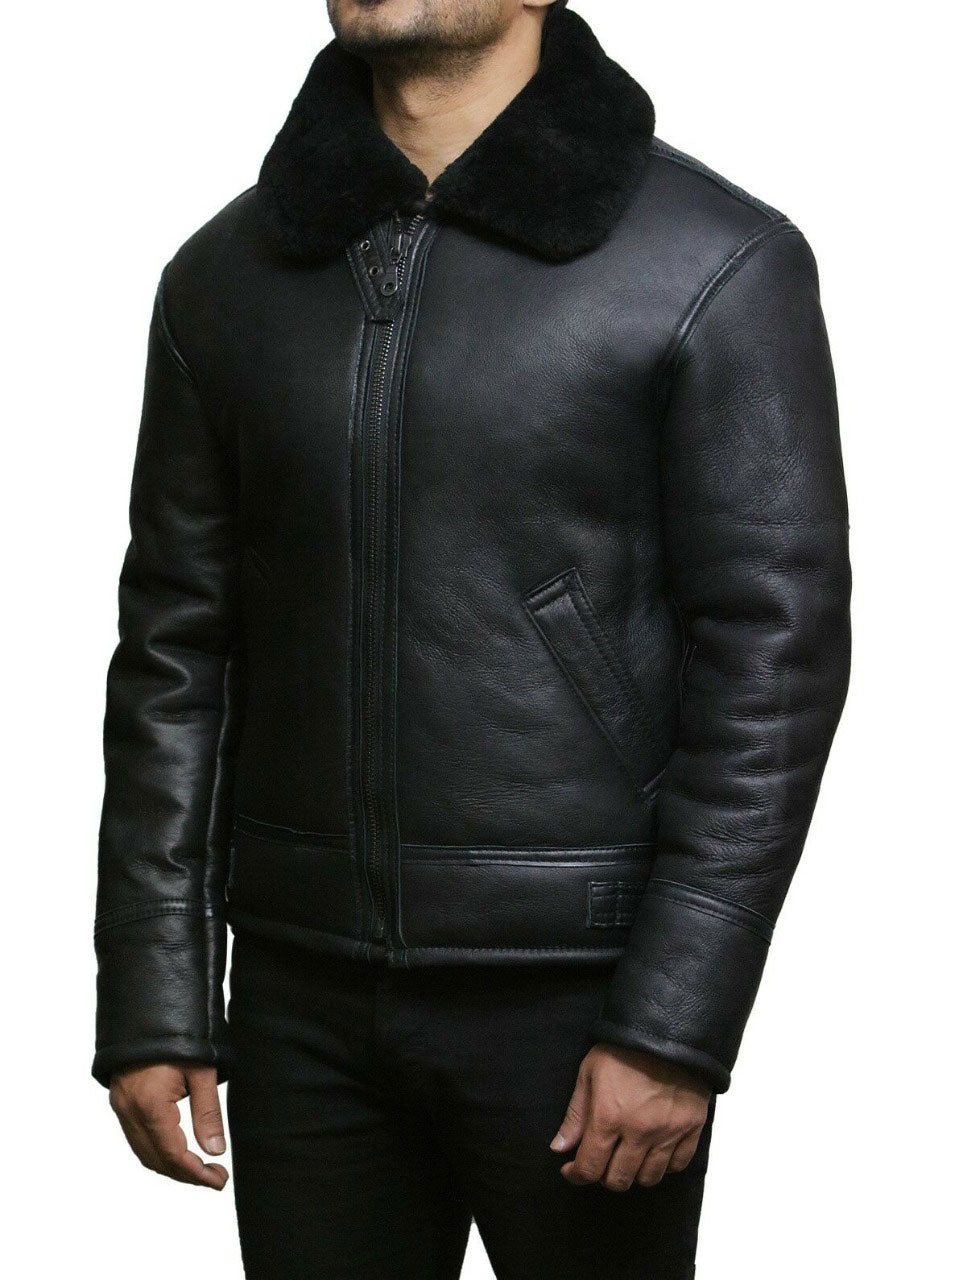 Tailor Made Men's Genuine Black Sheepskin Leather Flying Pilot Stylish Jackets Coat